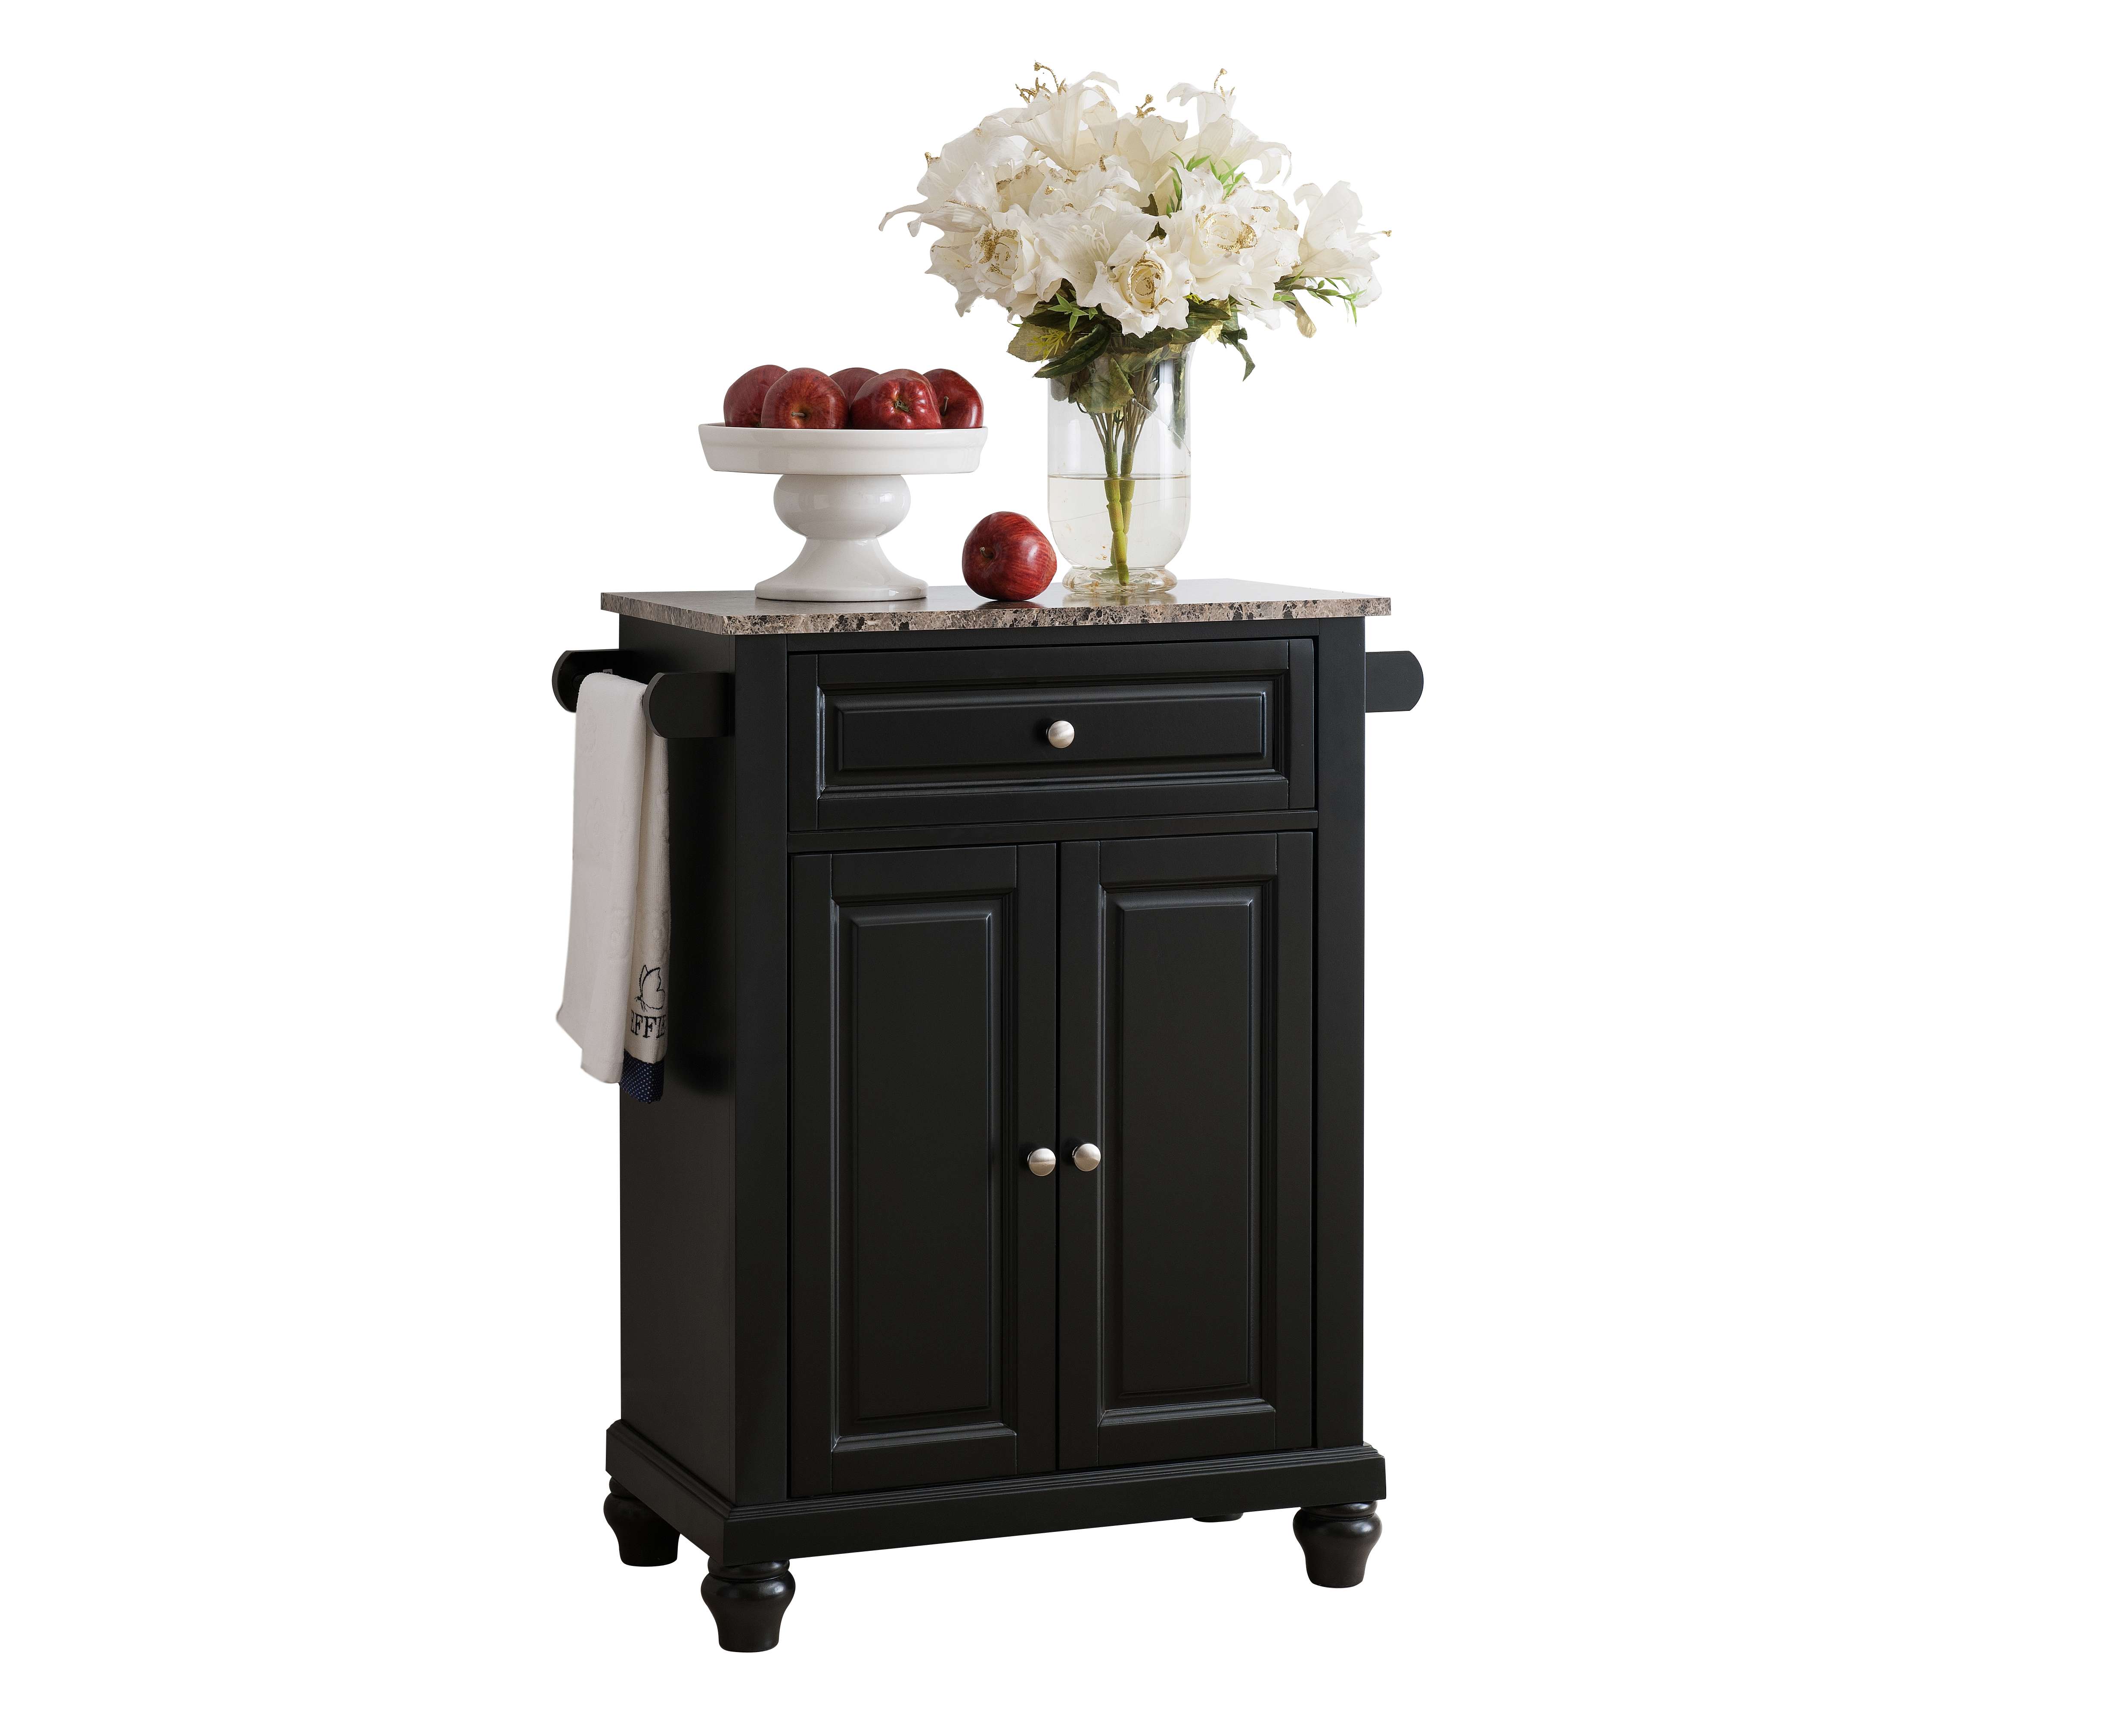 Pilaster Designs - Black With Marble Finish Top Kitchen Island Storage Cabinet